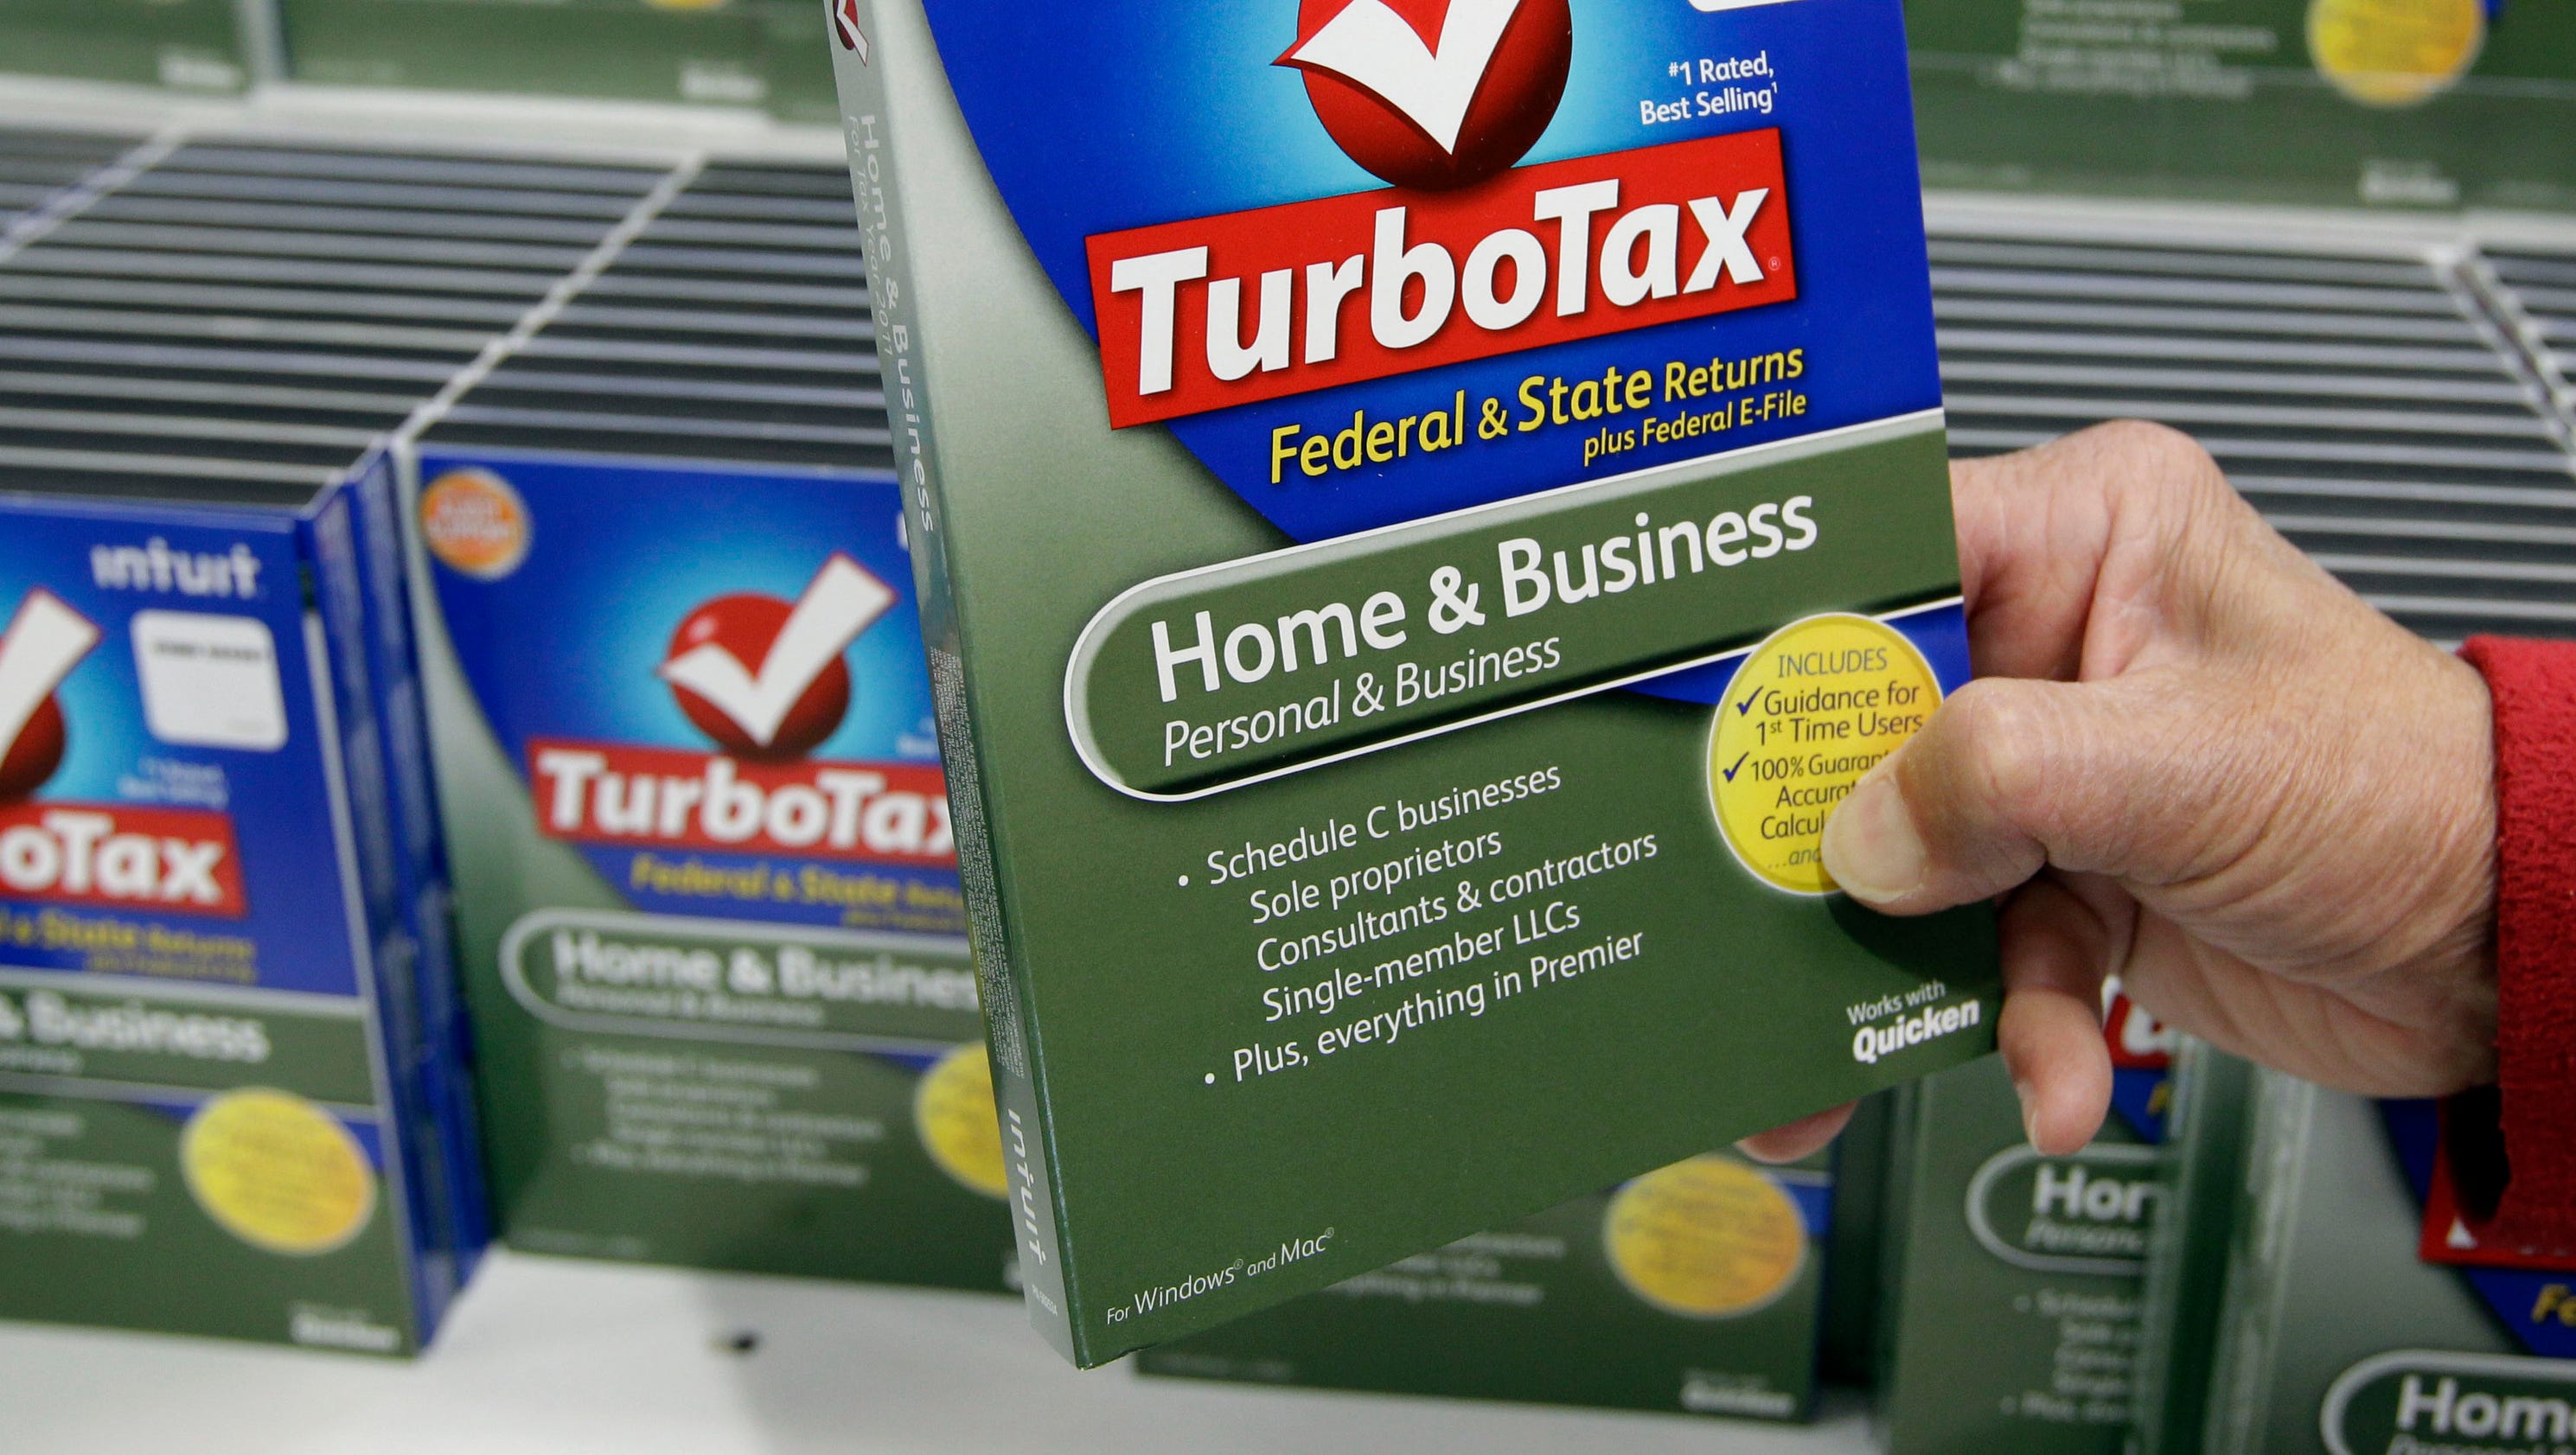 TurboTax resumes filings amid fraud outbreak